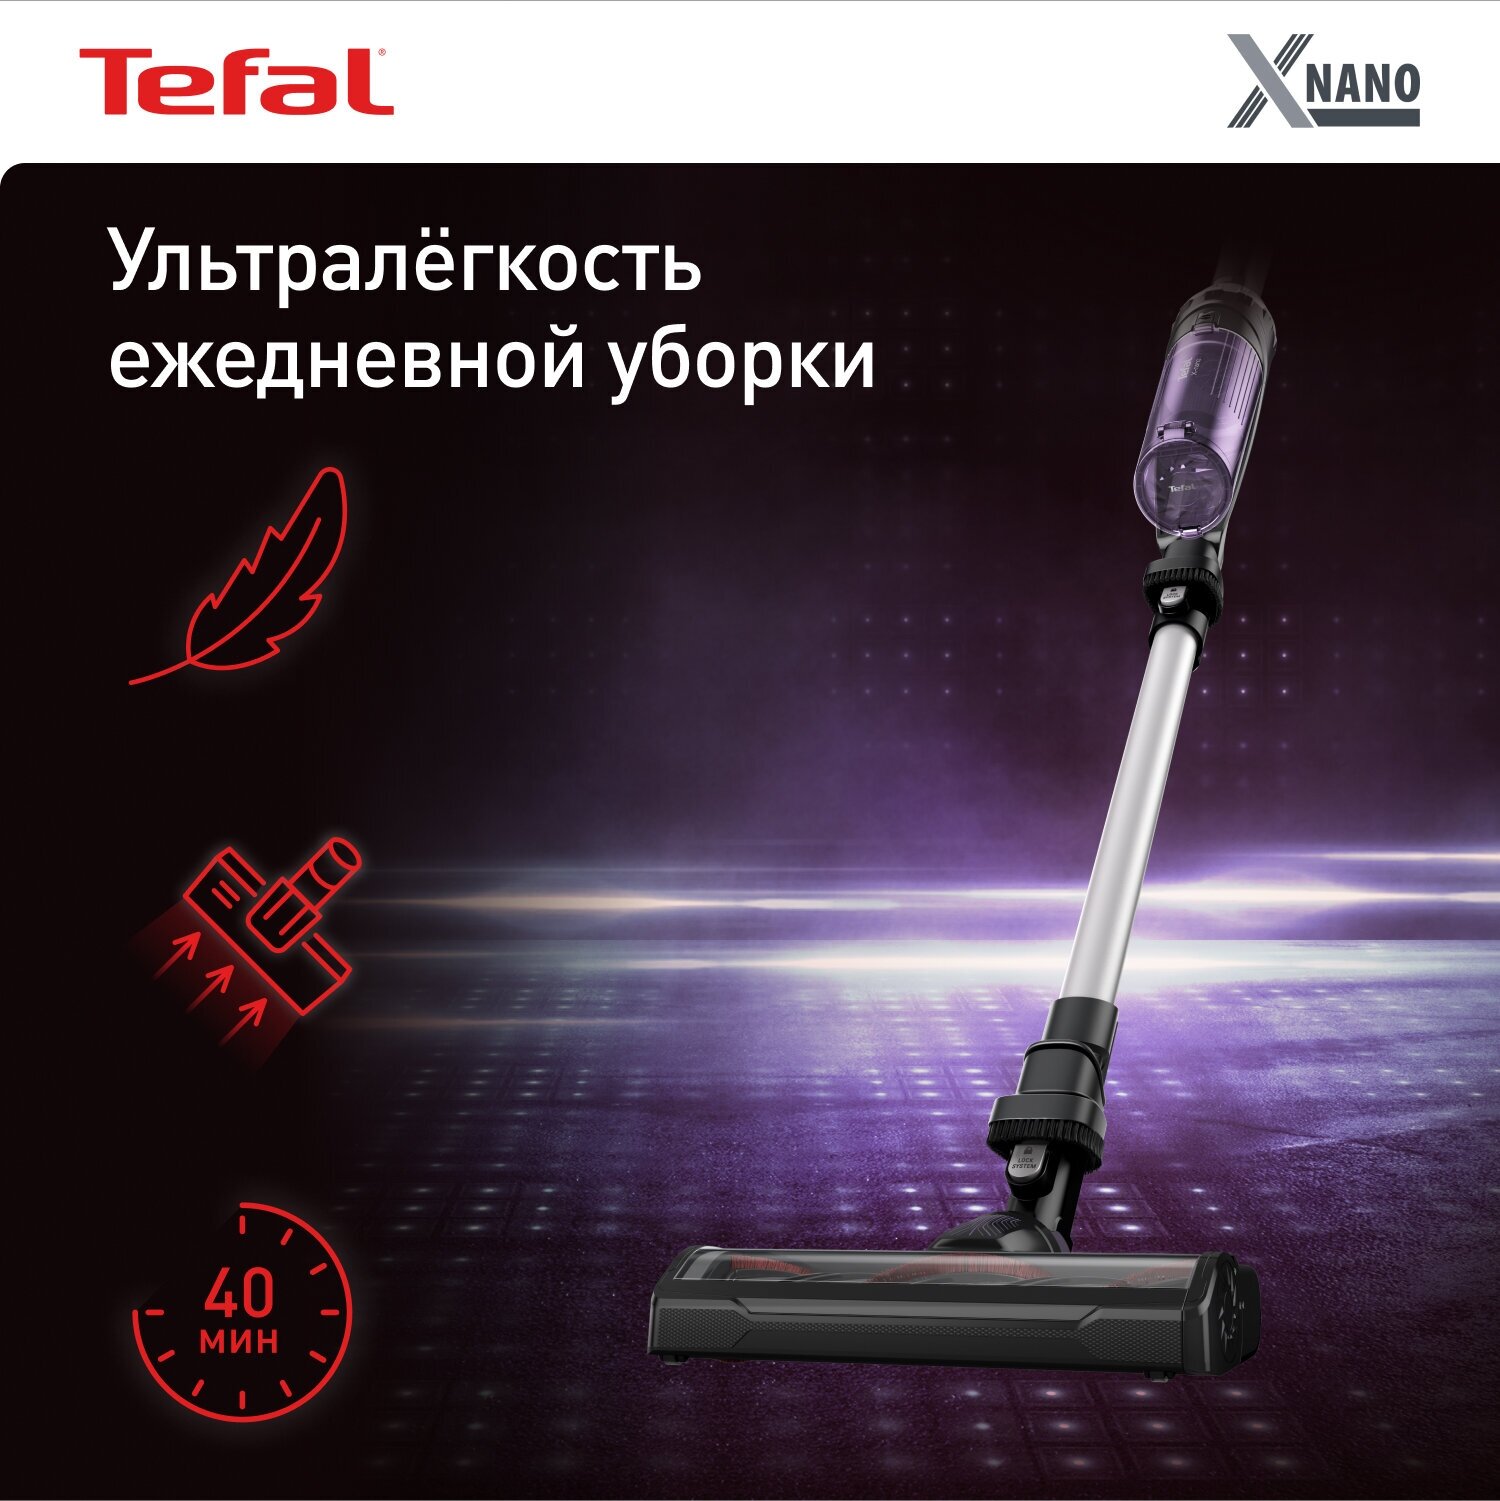 Пылесос Tefal X-Nano Essential TY1129WO